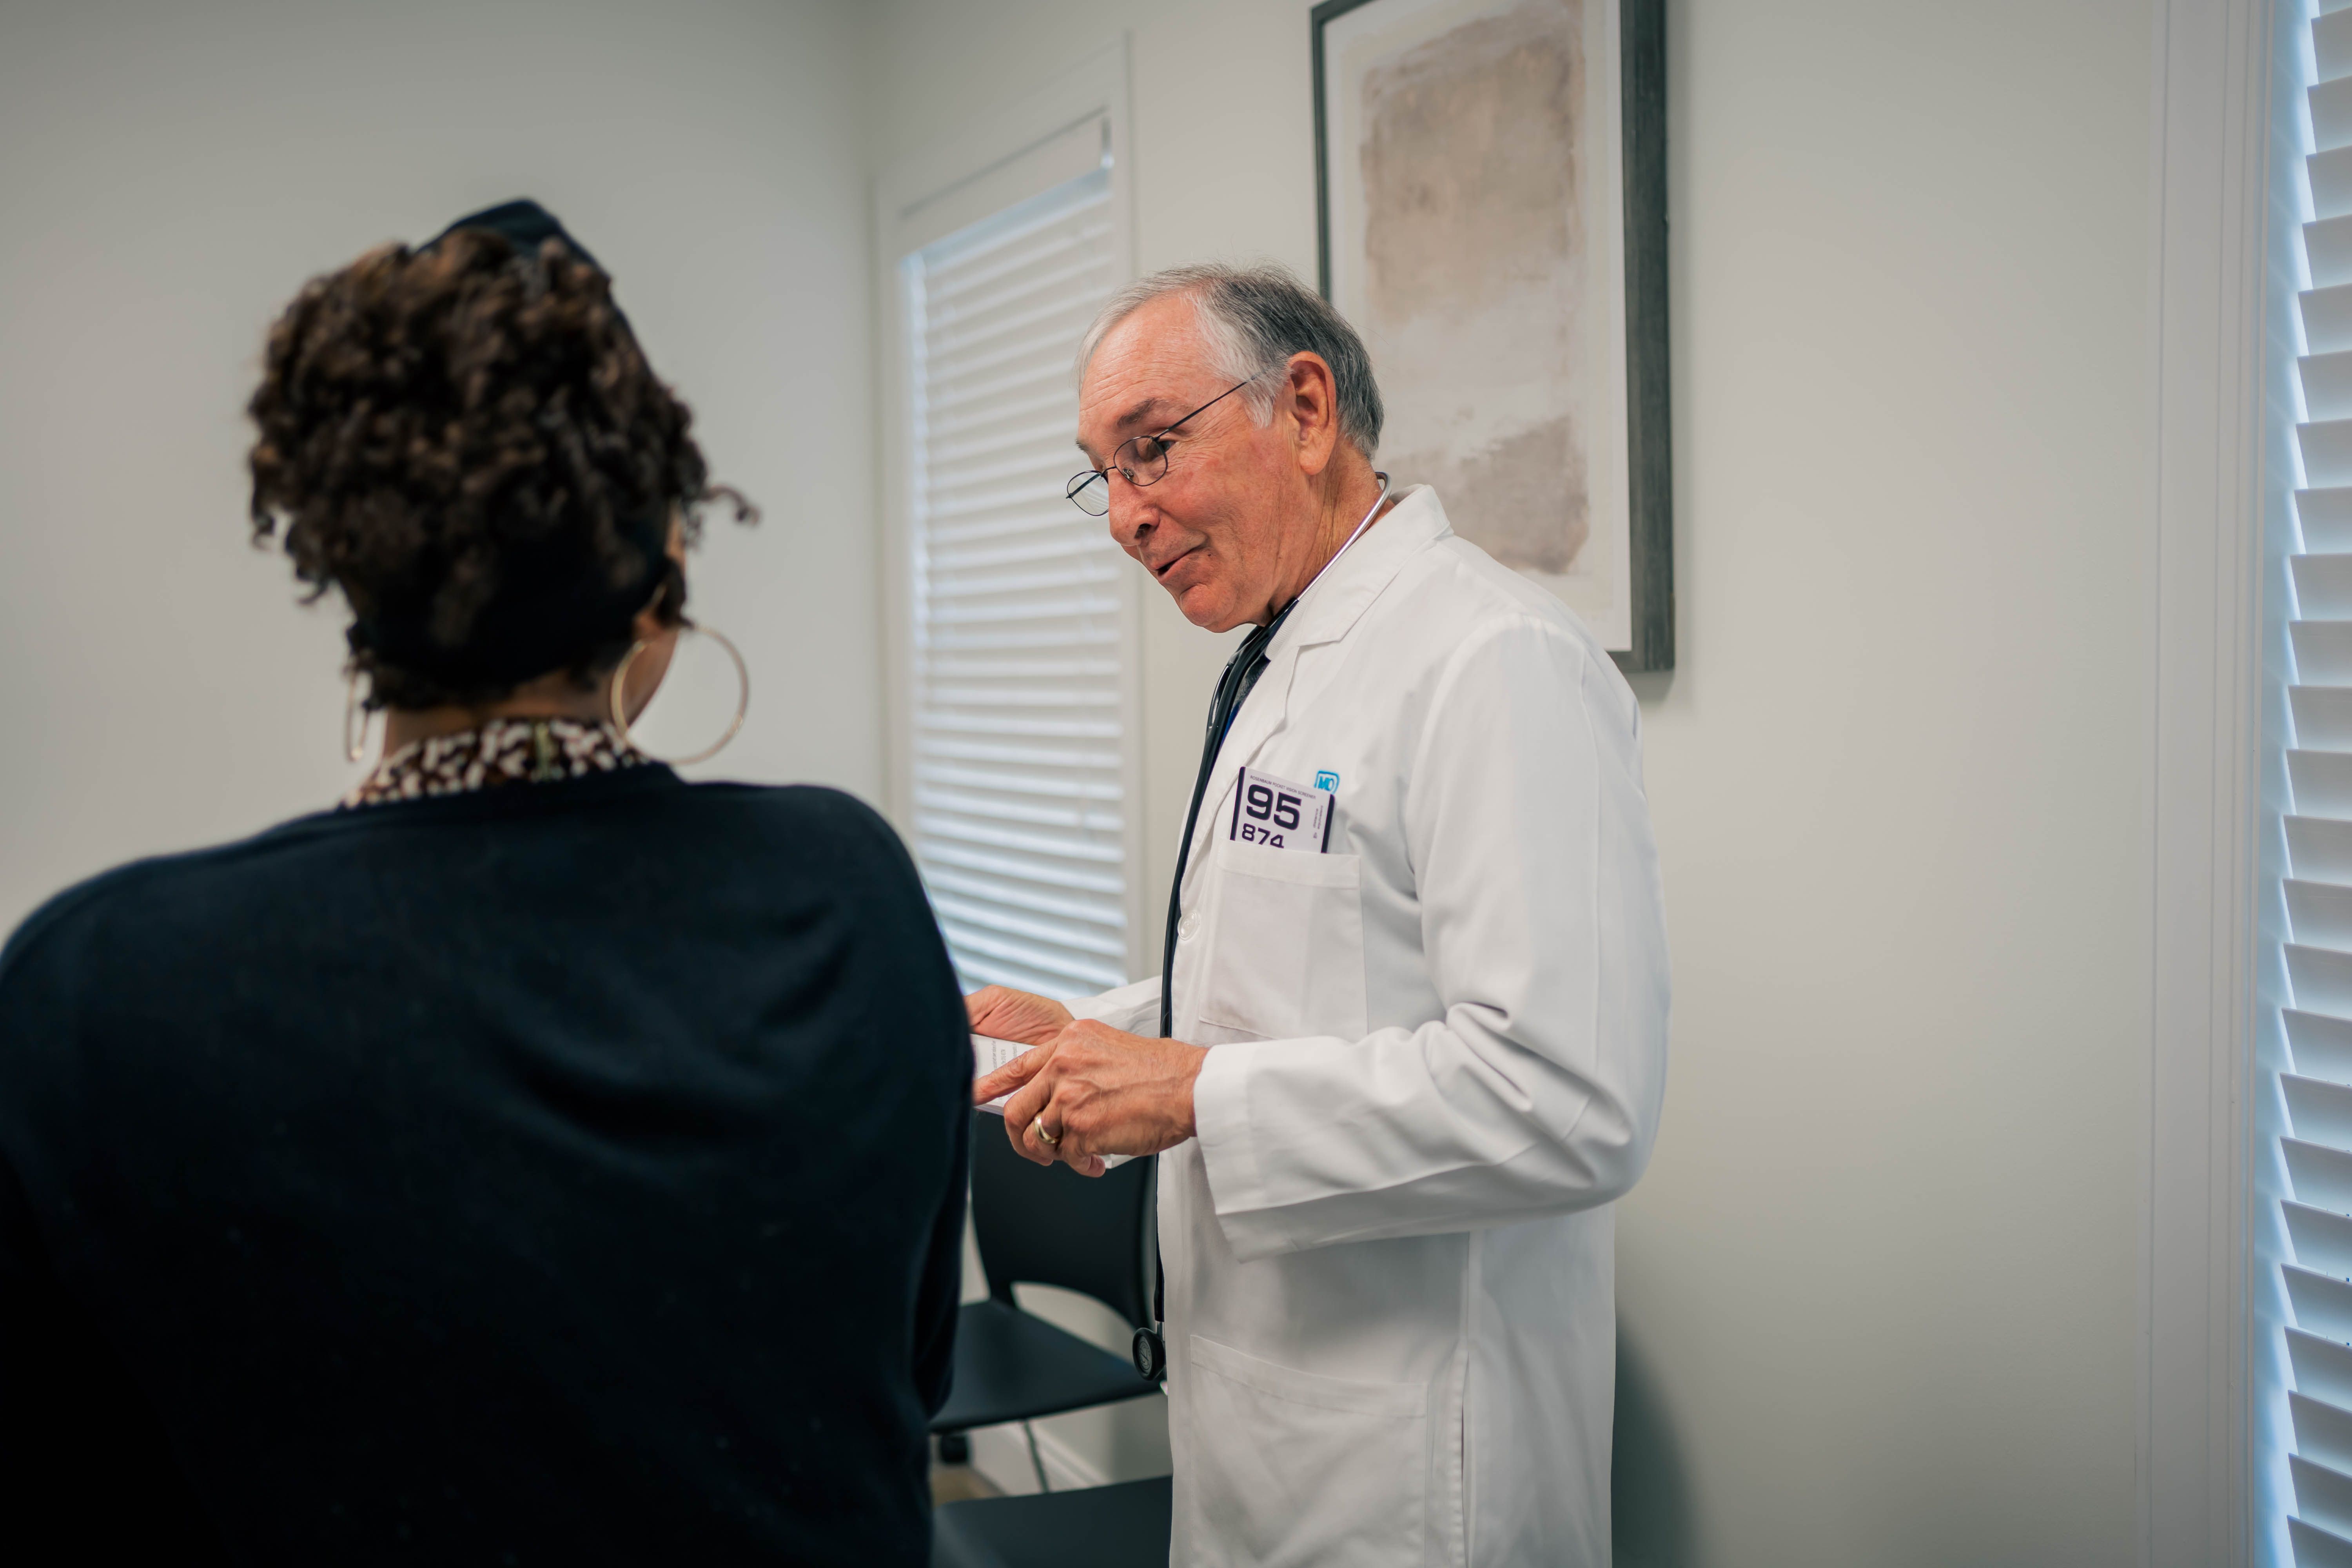 Dr. Durham, a concierge physician, talks with a patient